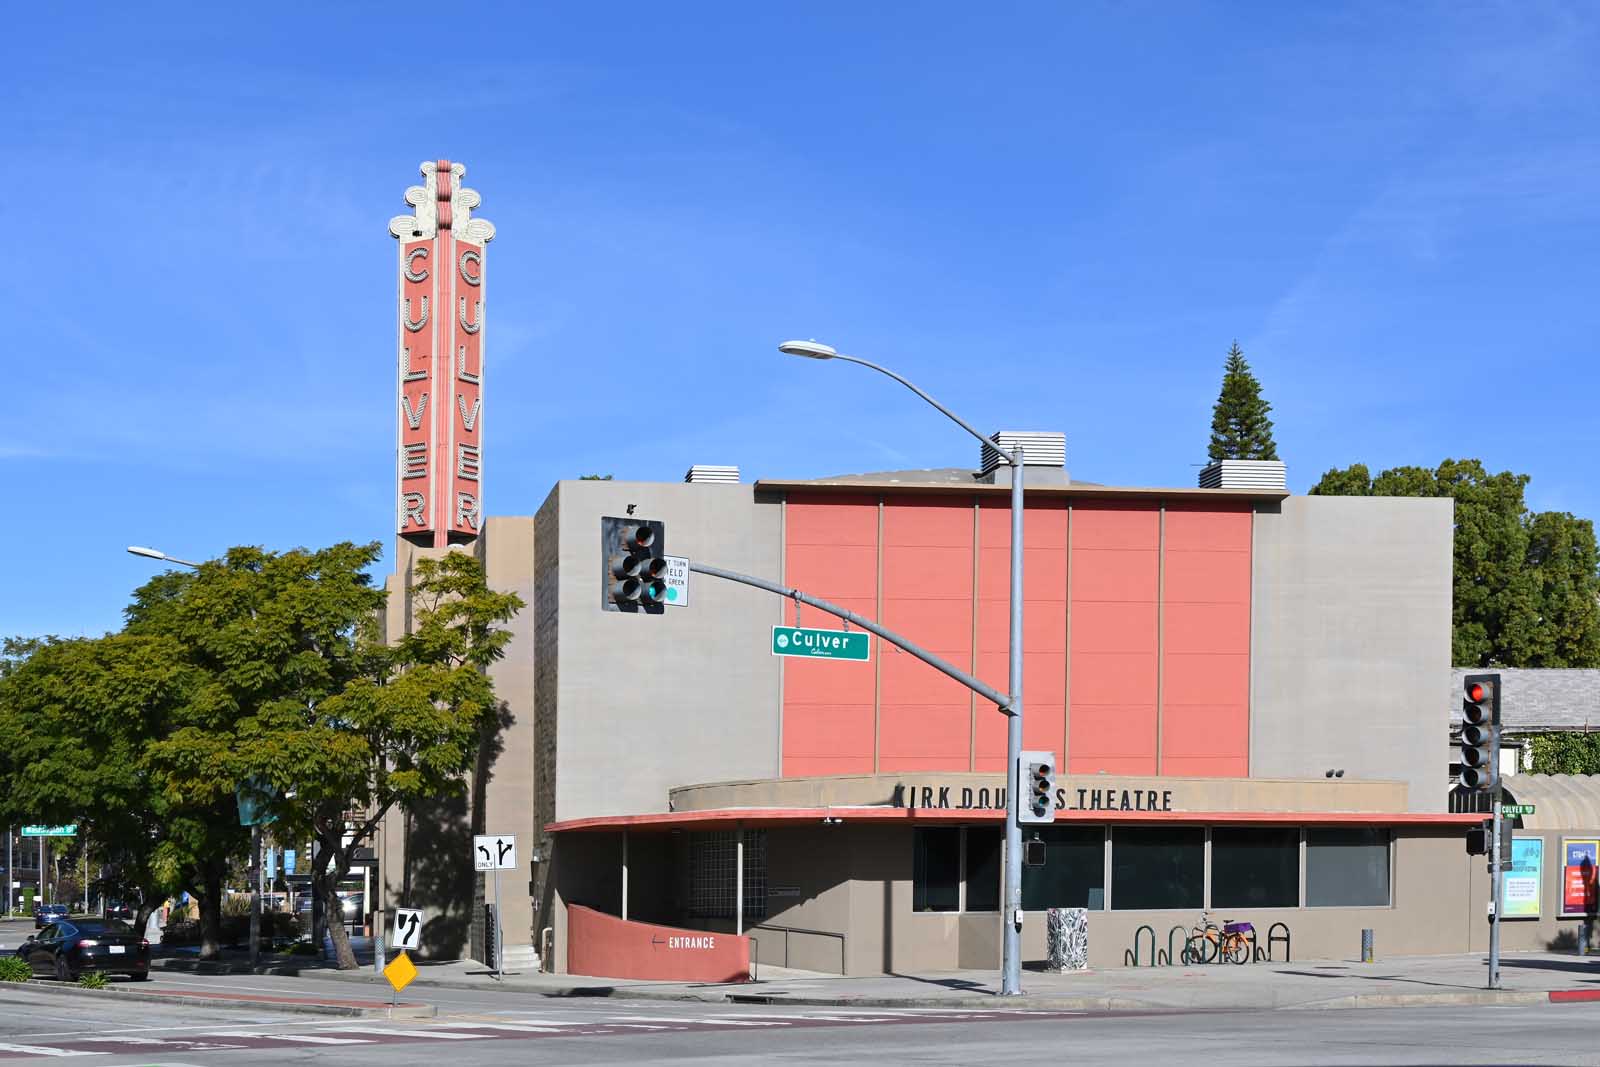 Kirk Douglas Theater in Culver City